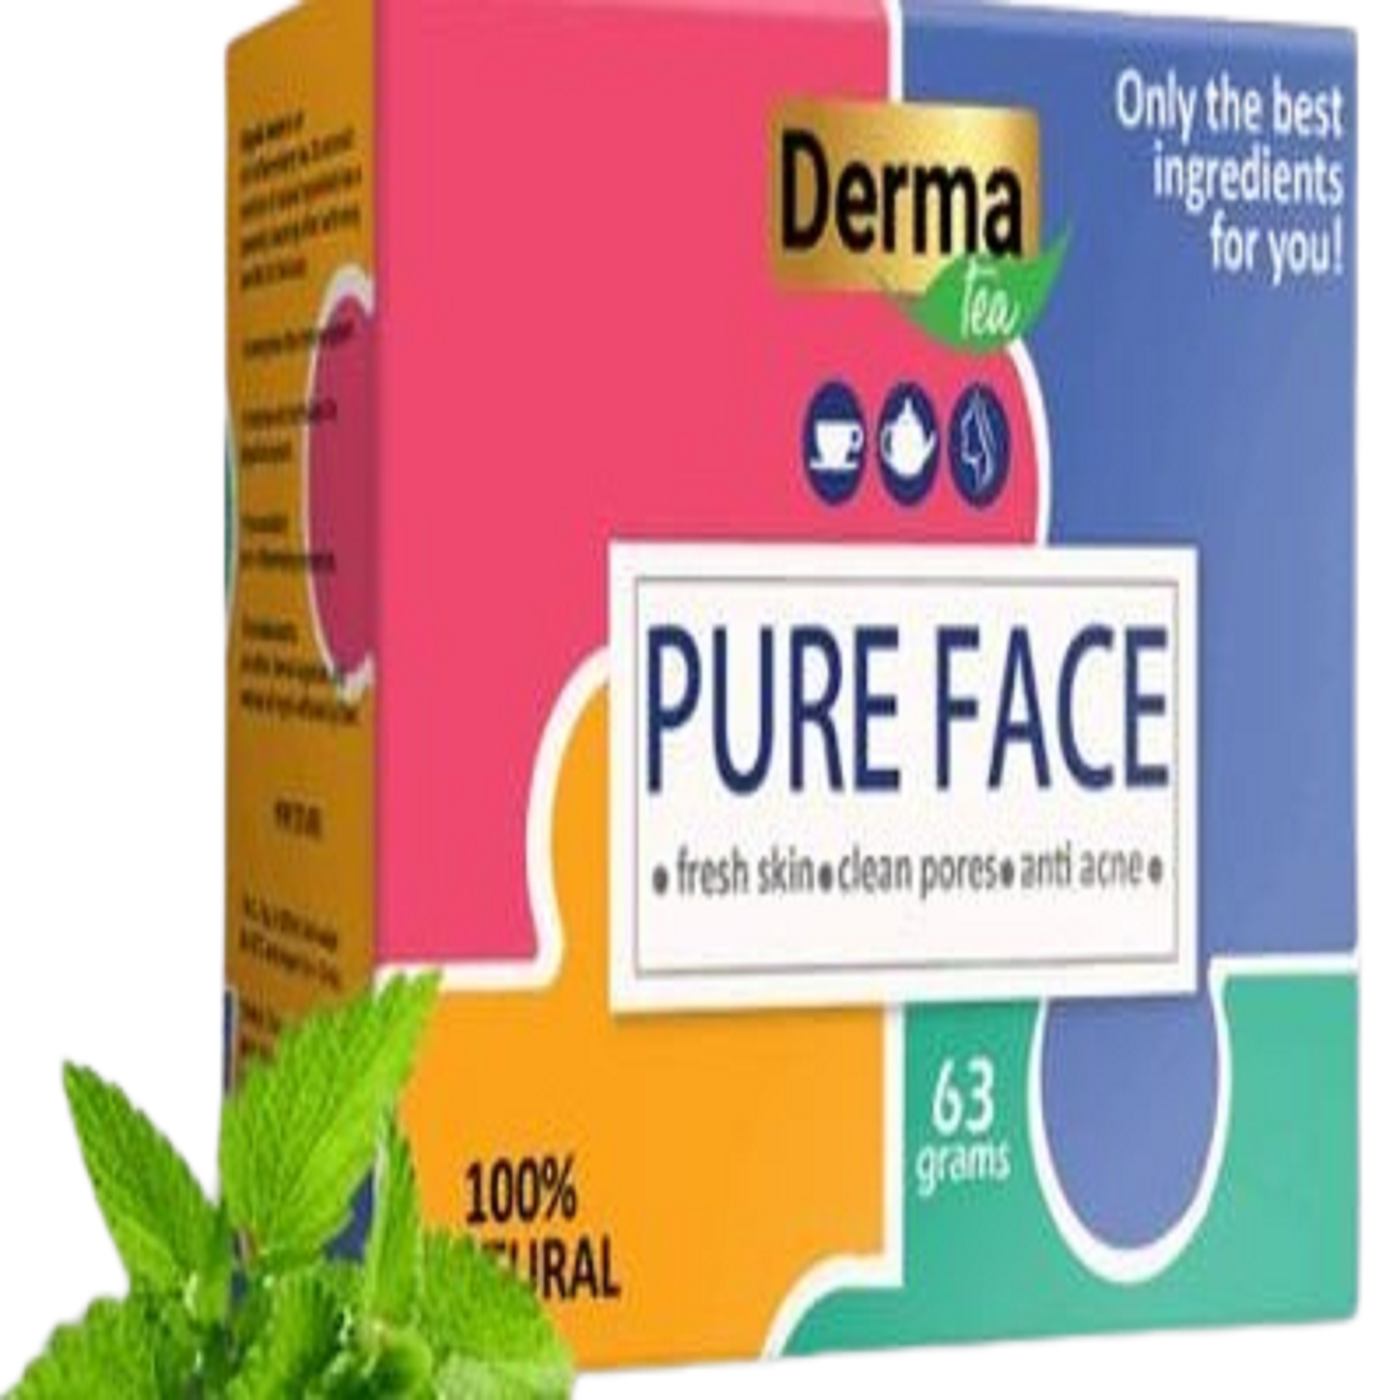 Derma tea